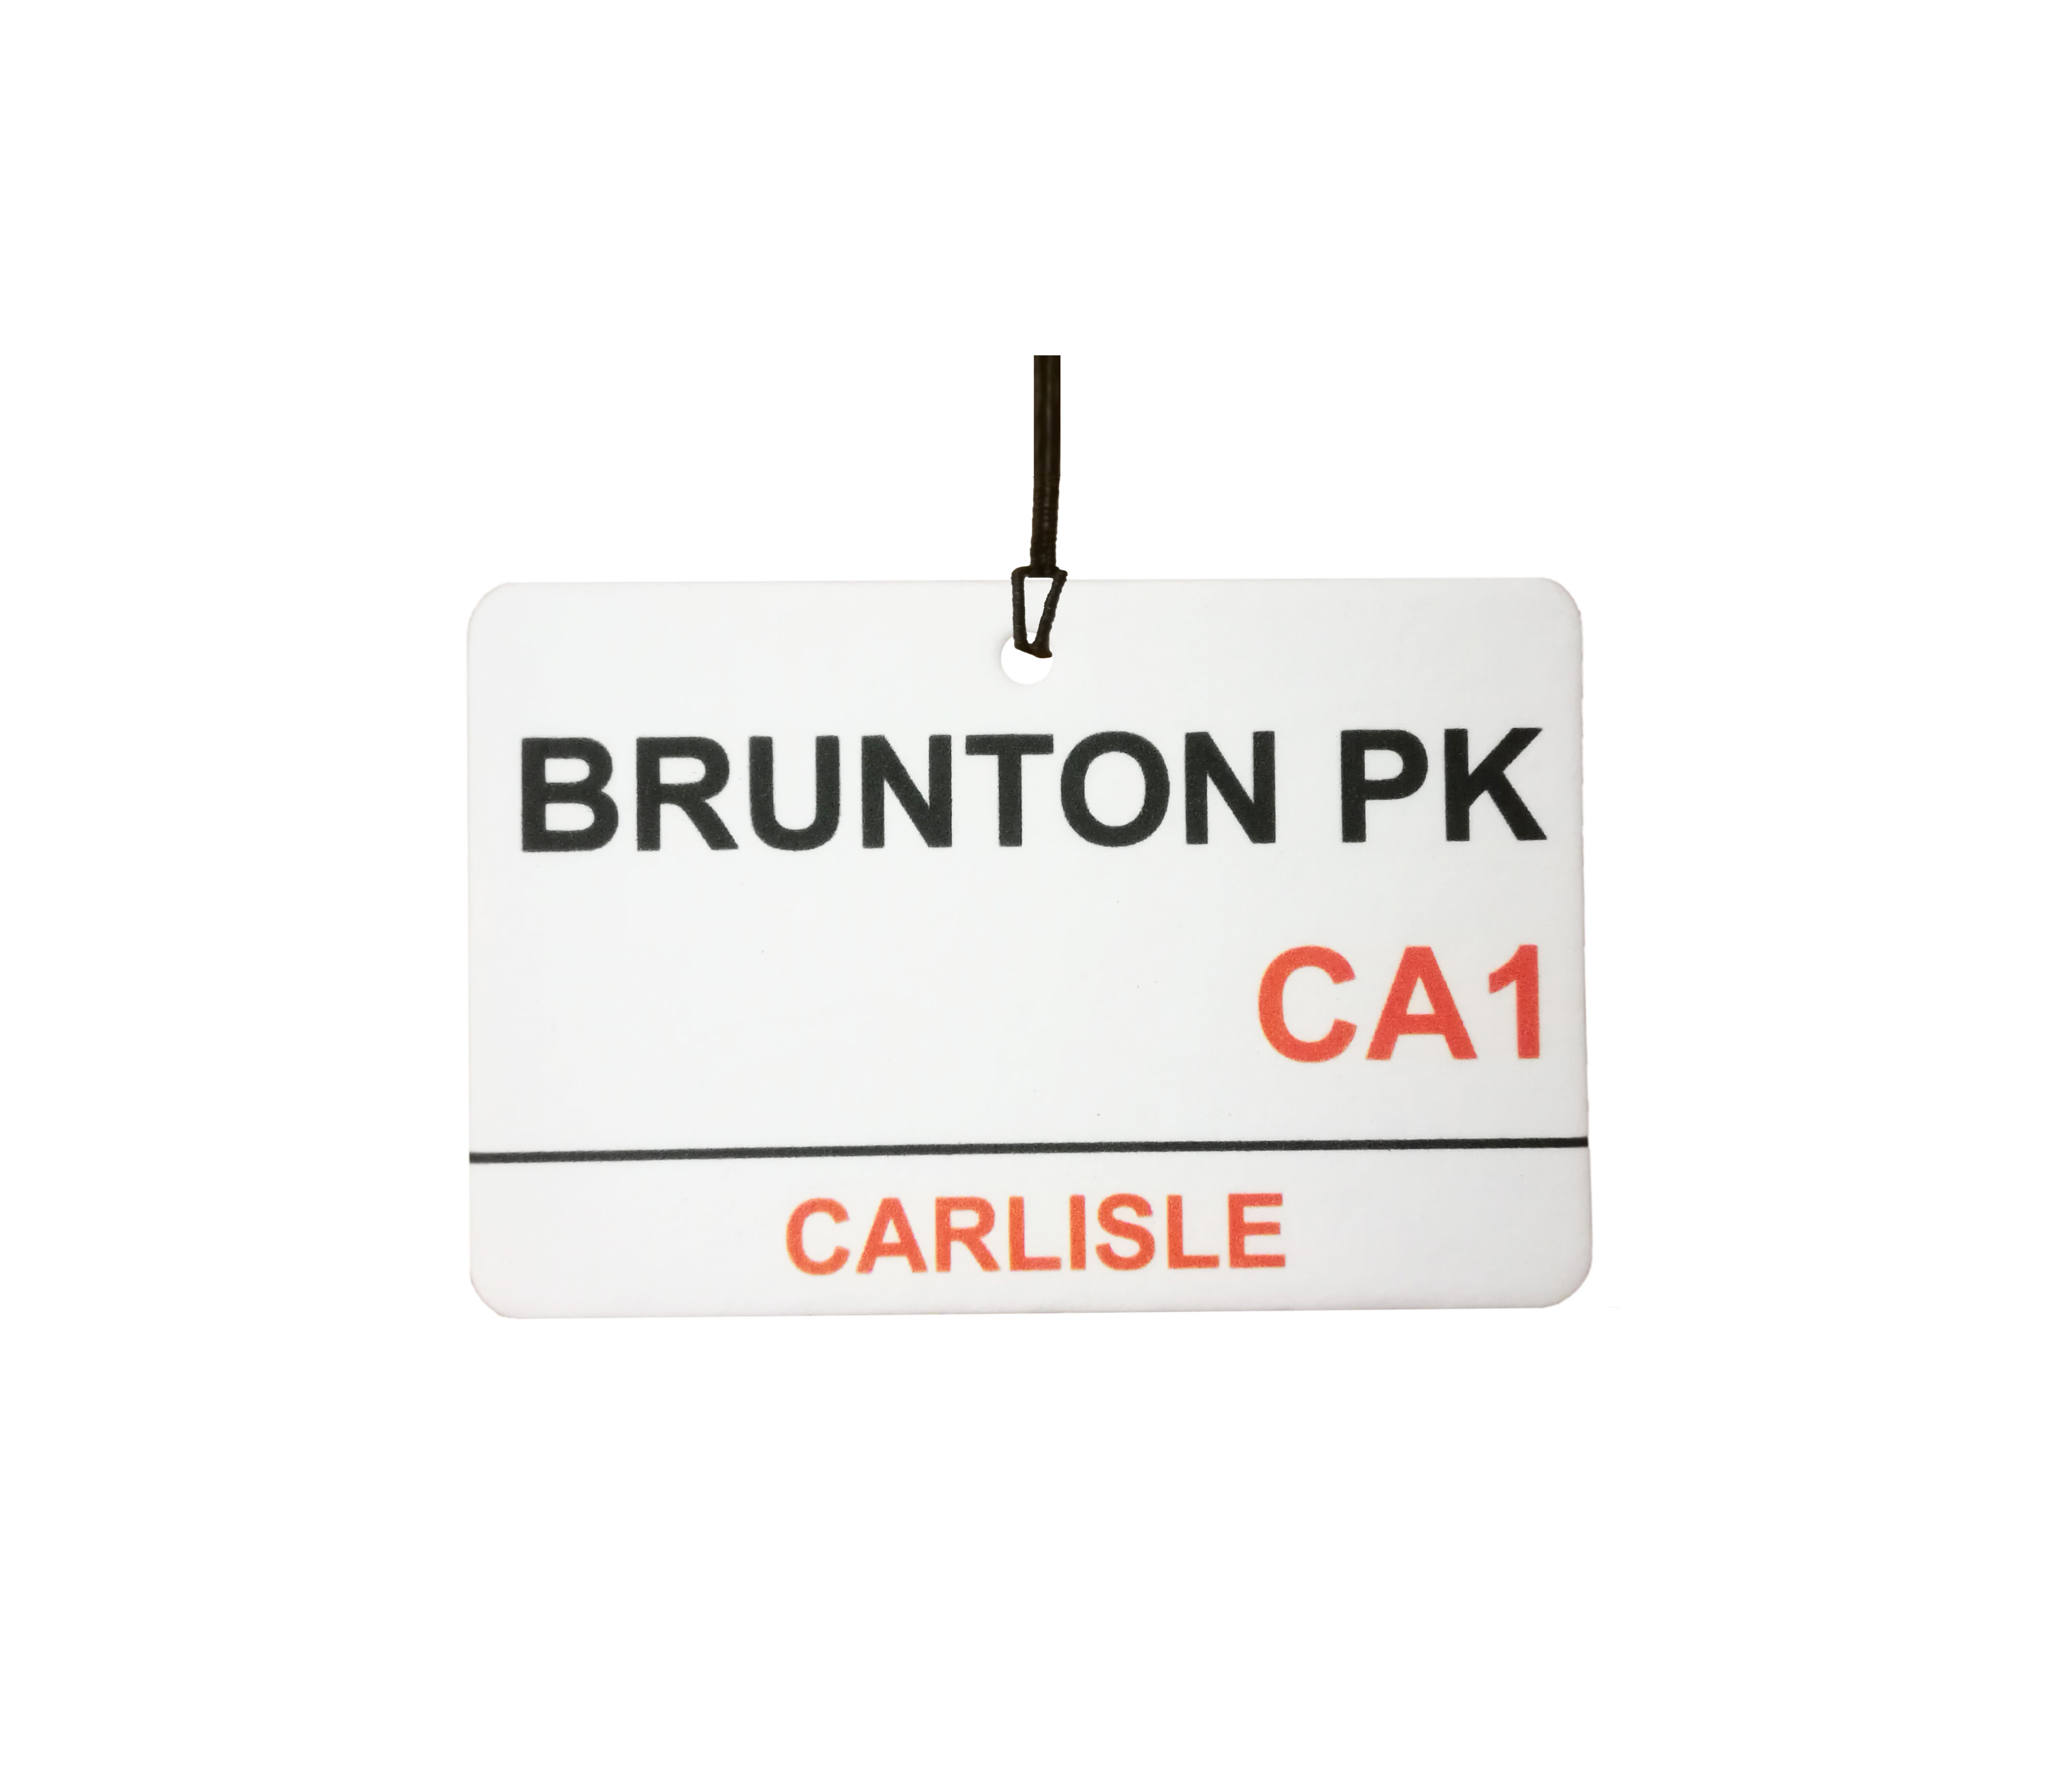 Carlisle / Brunton Park Street Sign